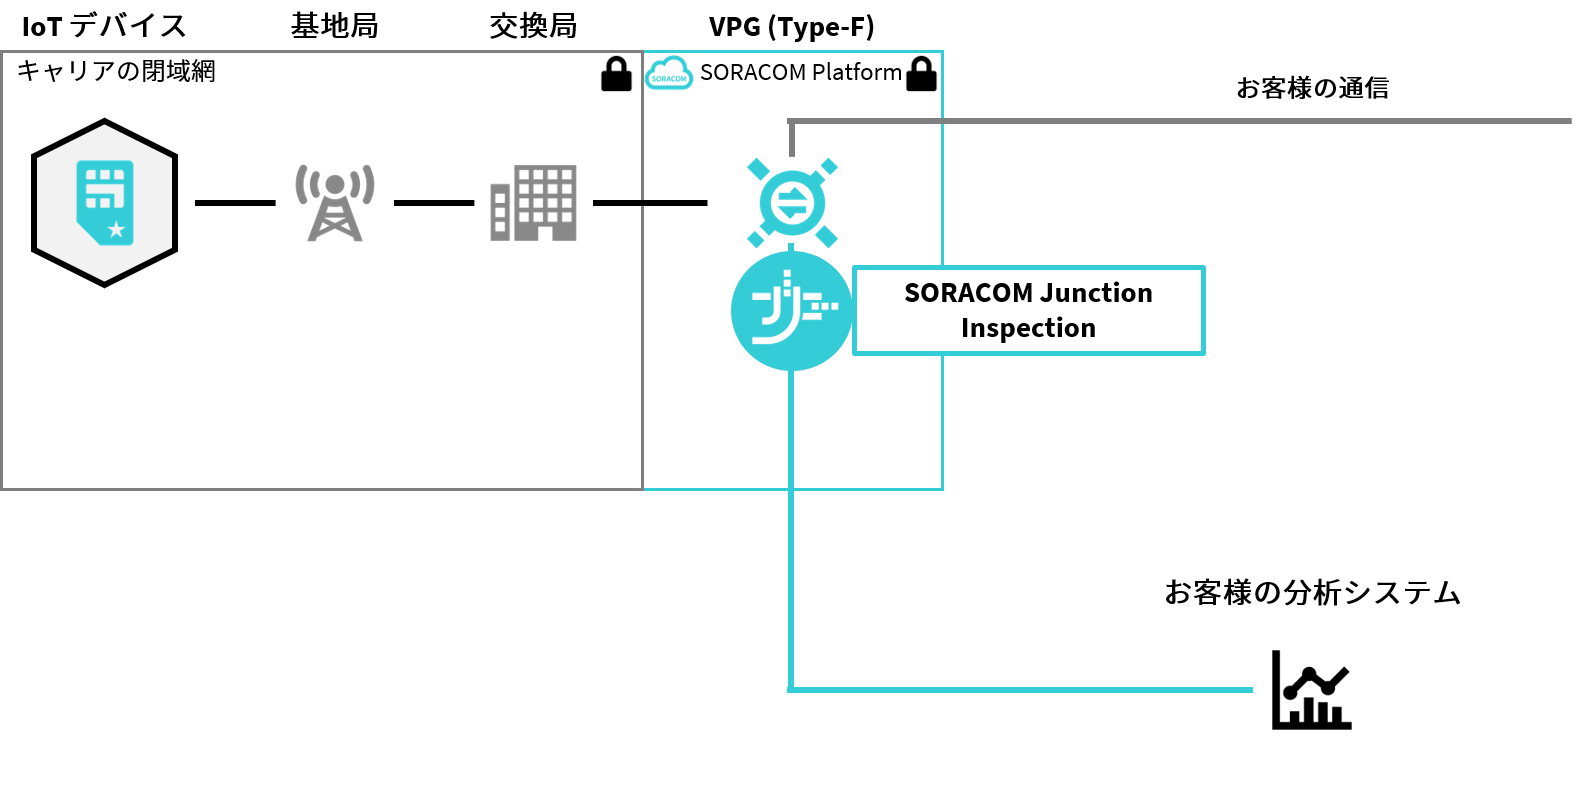 SORACOM Junction Inspection